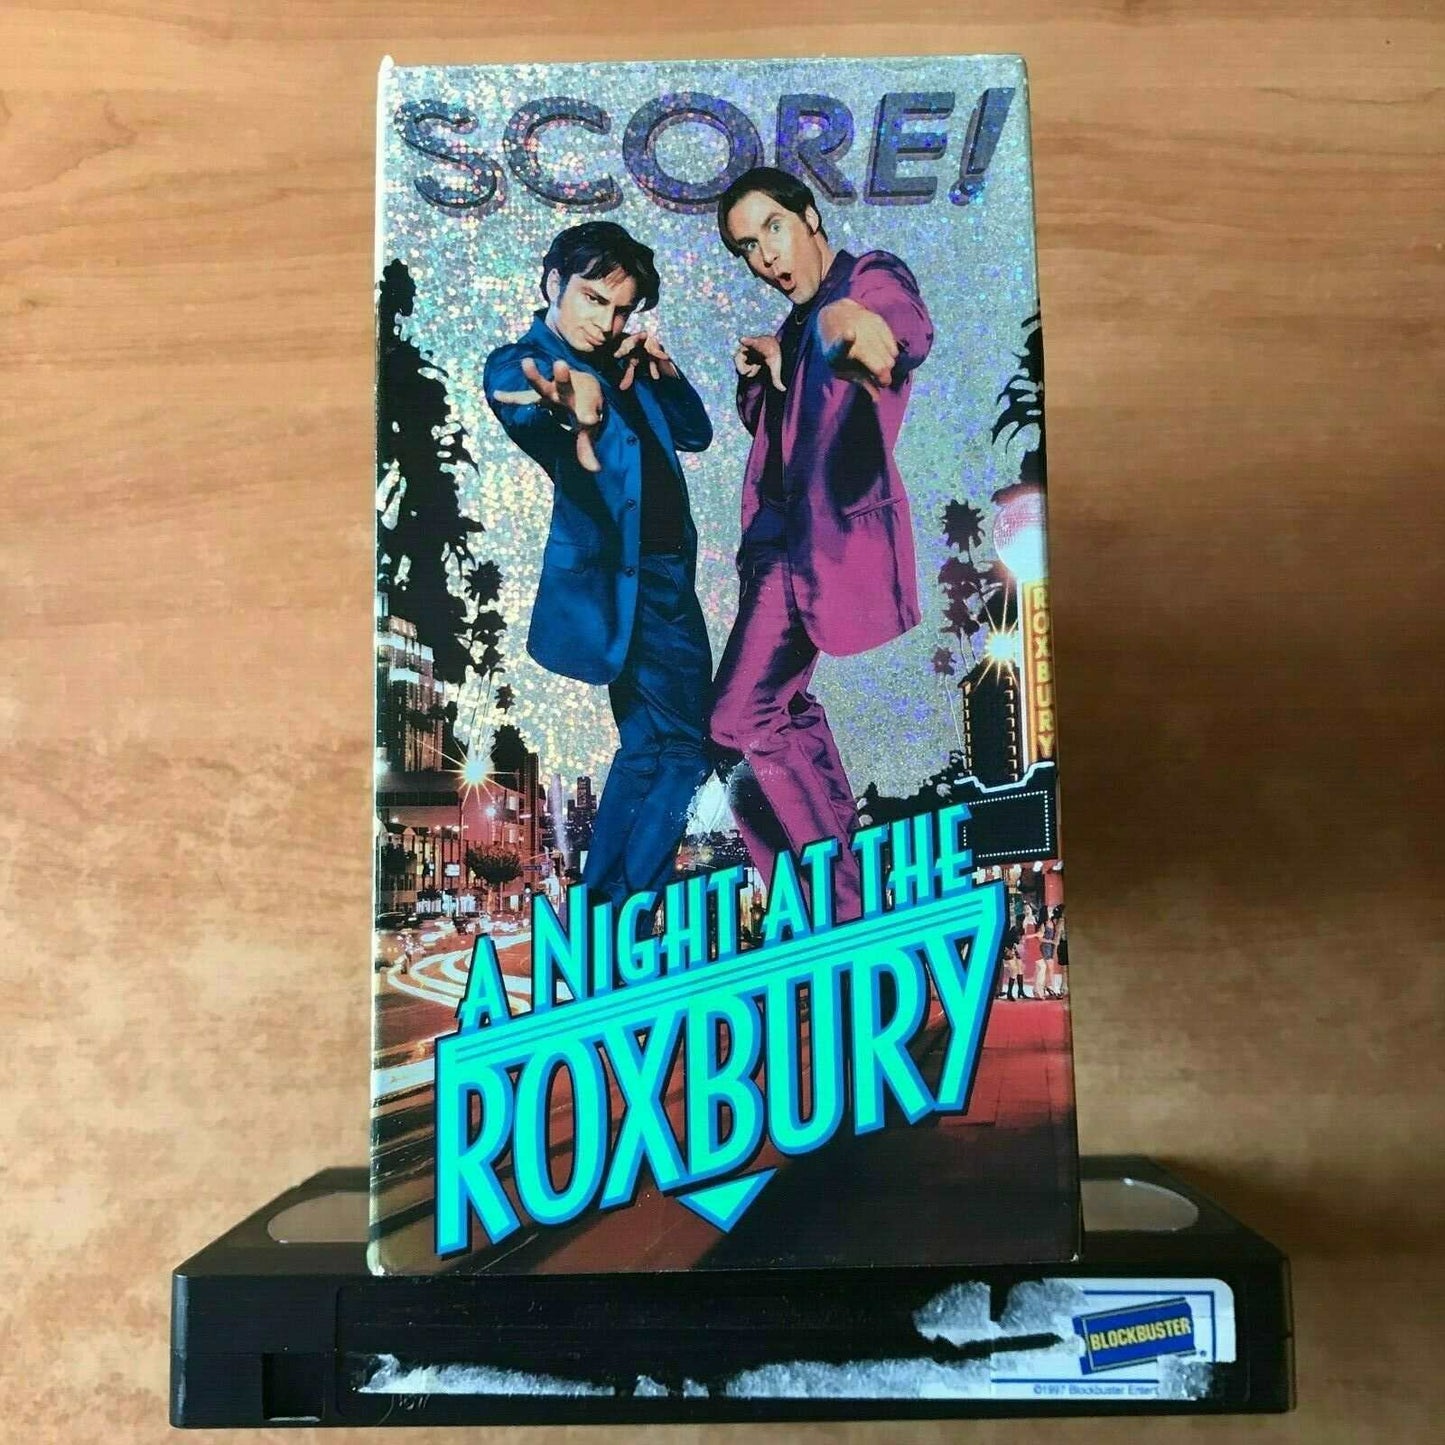 A Night At The Roxbury (1998): Music Comedy [Carton Box] Will Ferrell - Pal VHS-